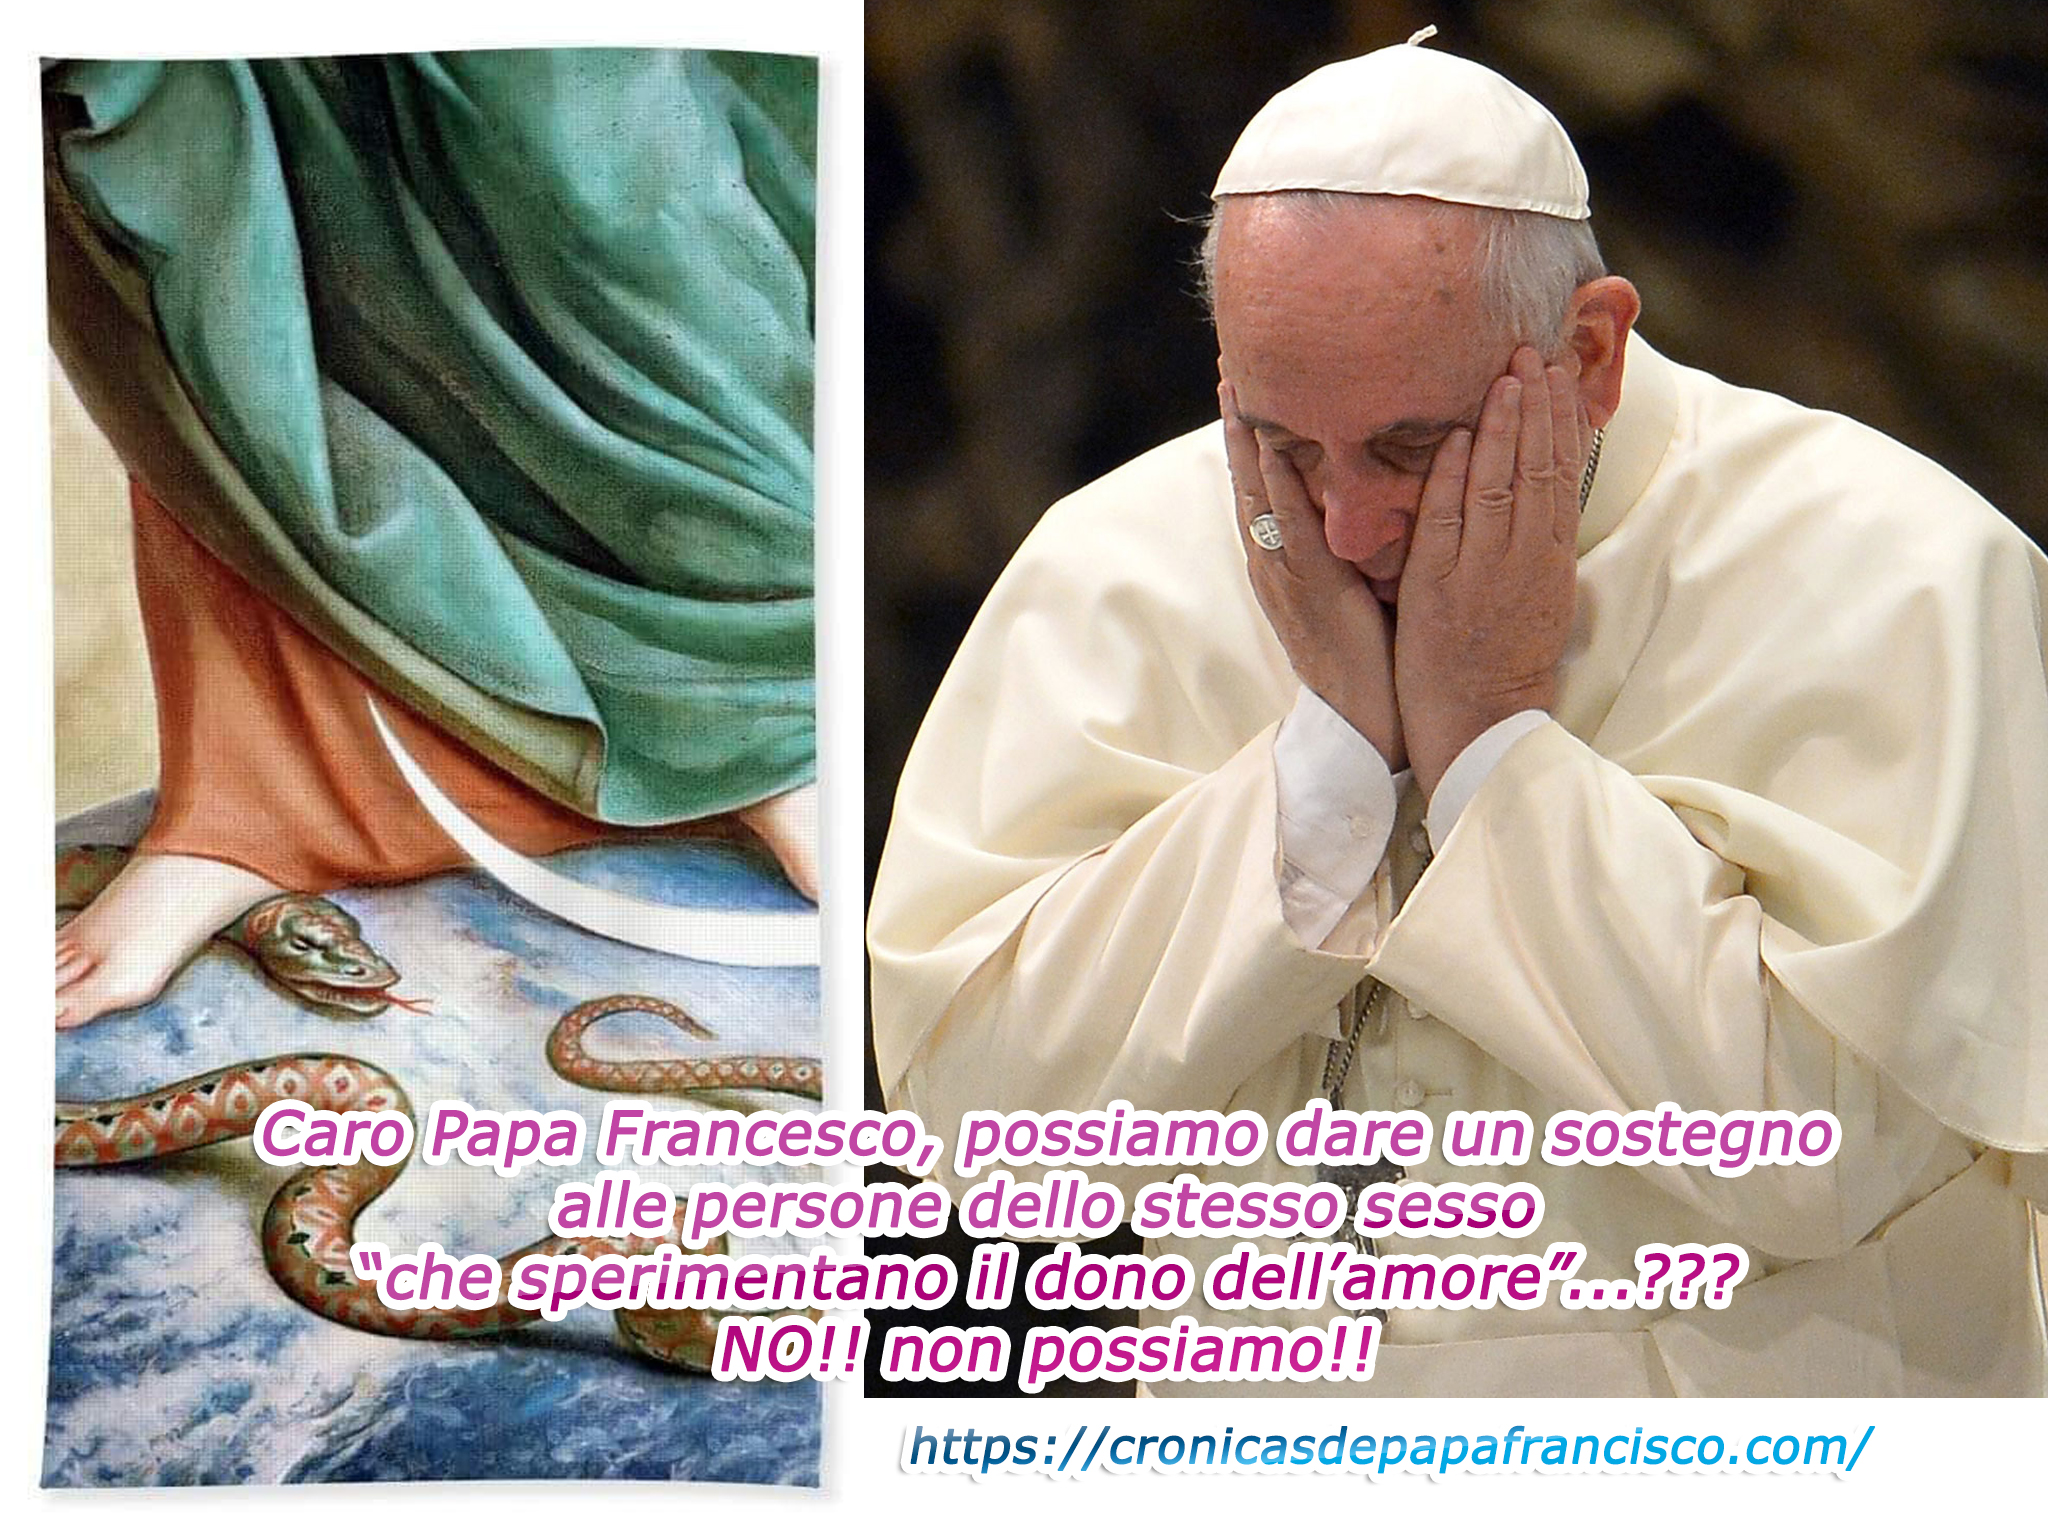 Amore-omo? NO! caro Papa Francesco, Dio non lo benedice affatto!